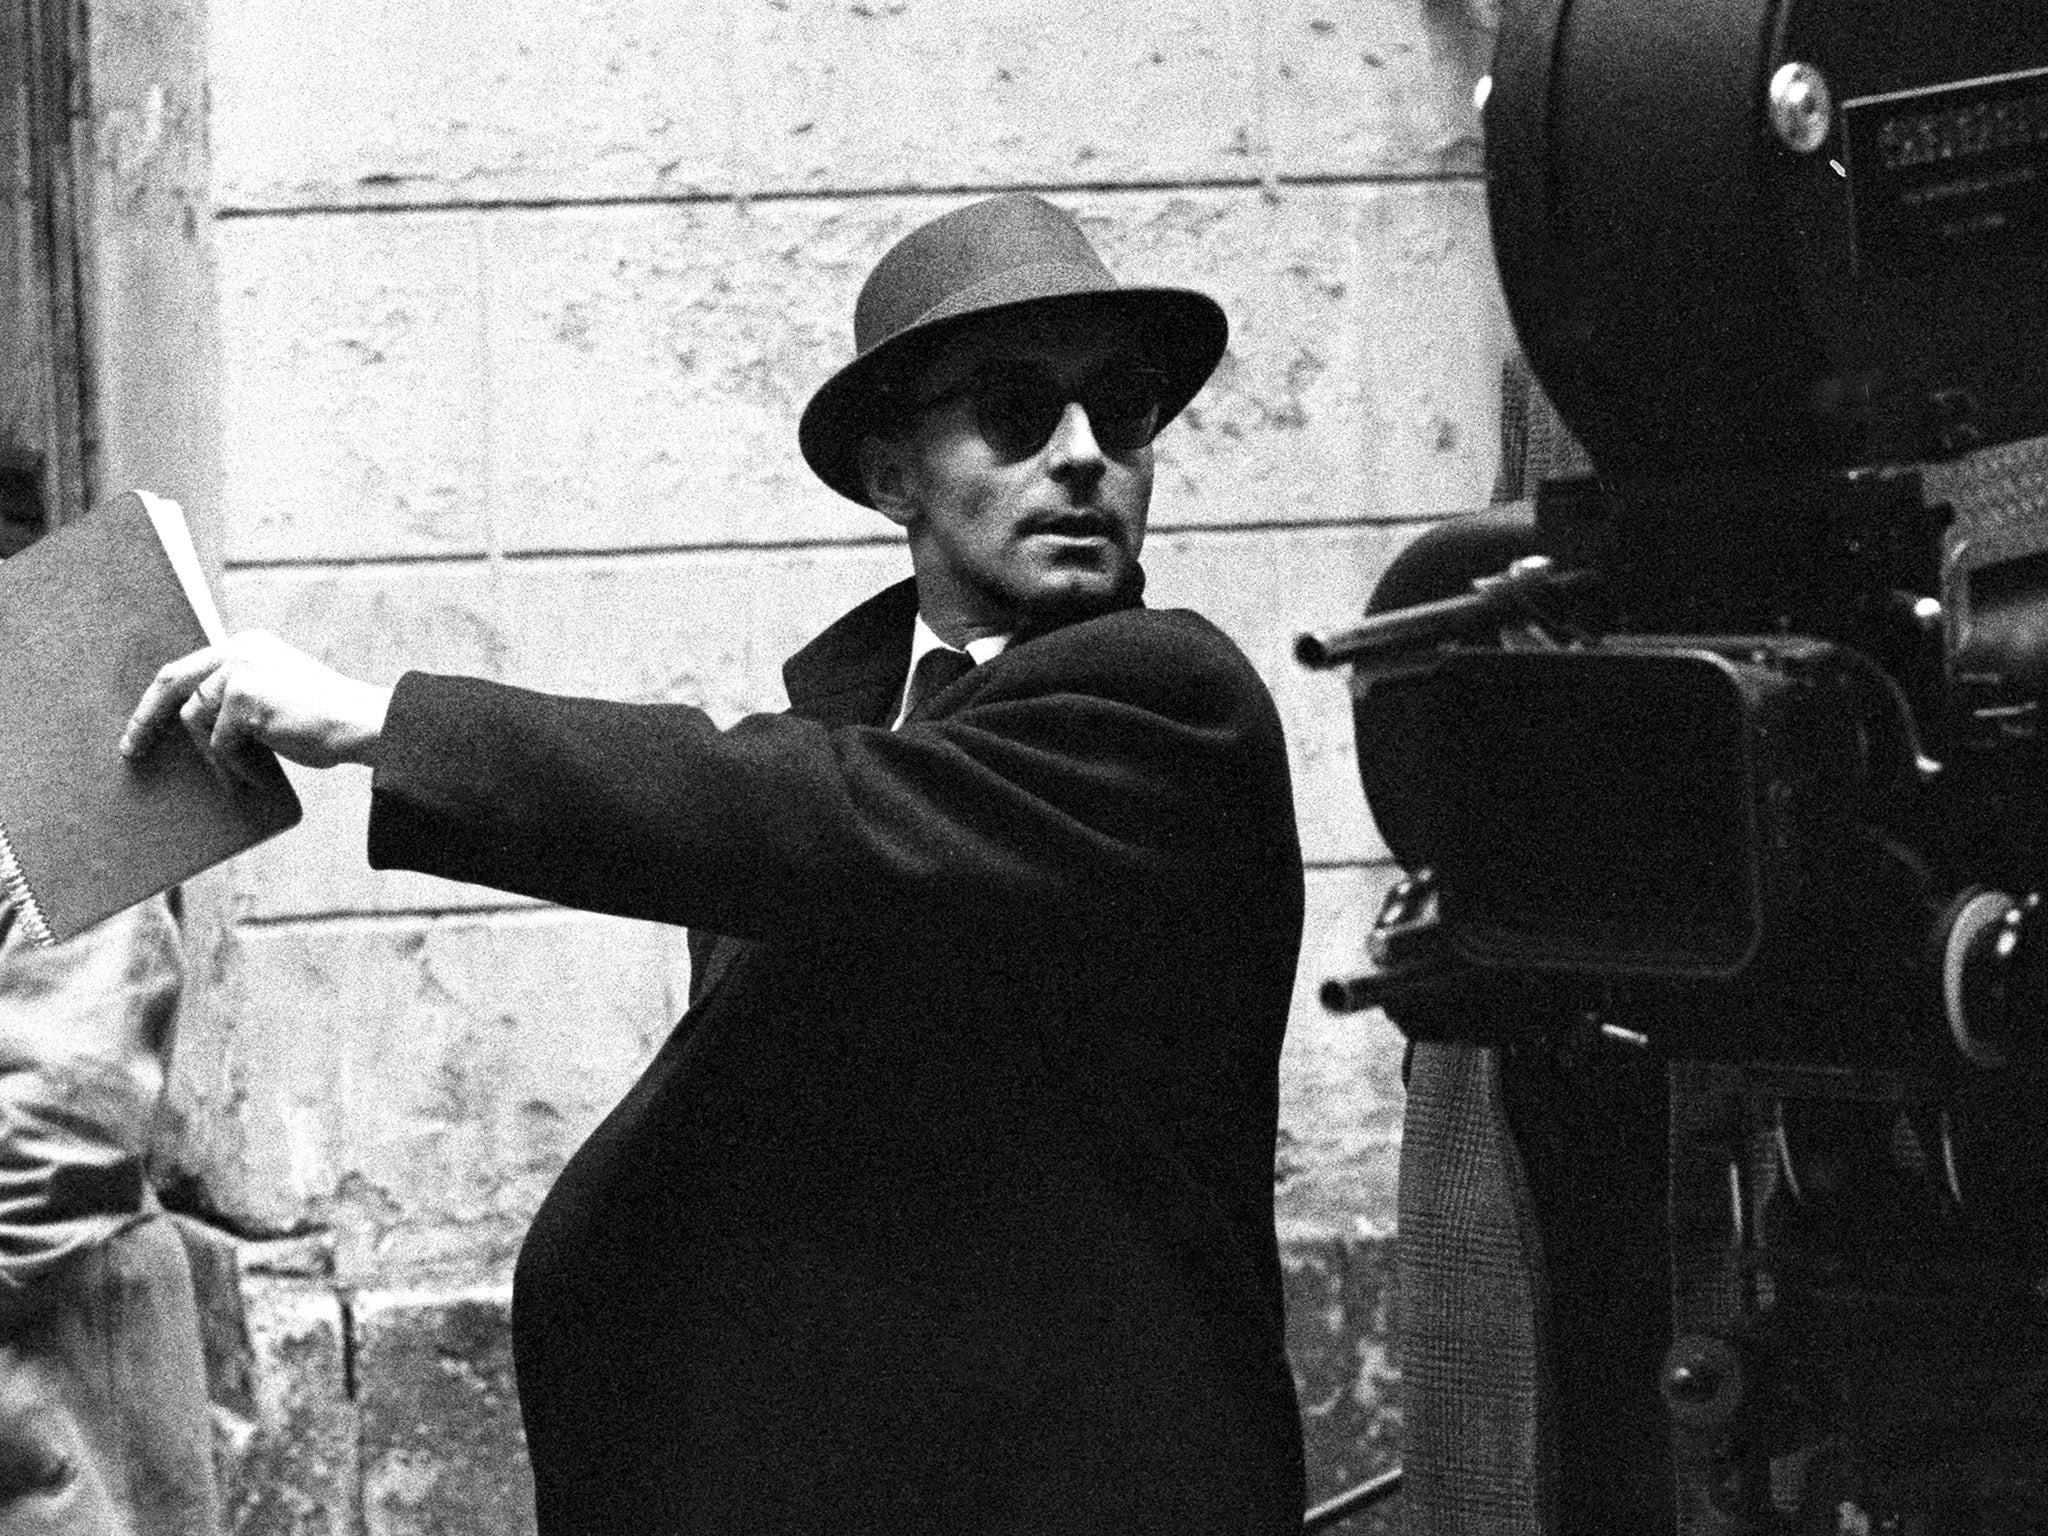 Jean-Luc Godard on set of his film 'Vivre sa vie' in 1962